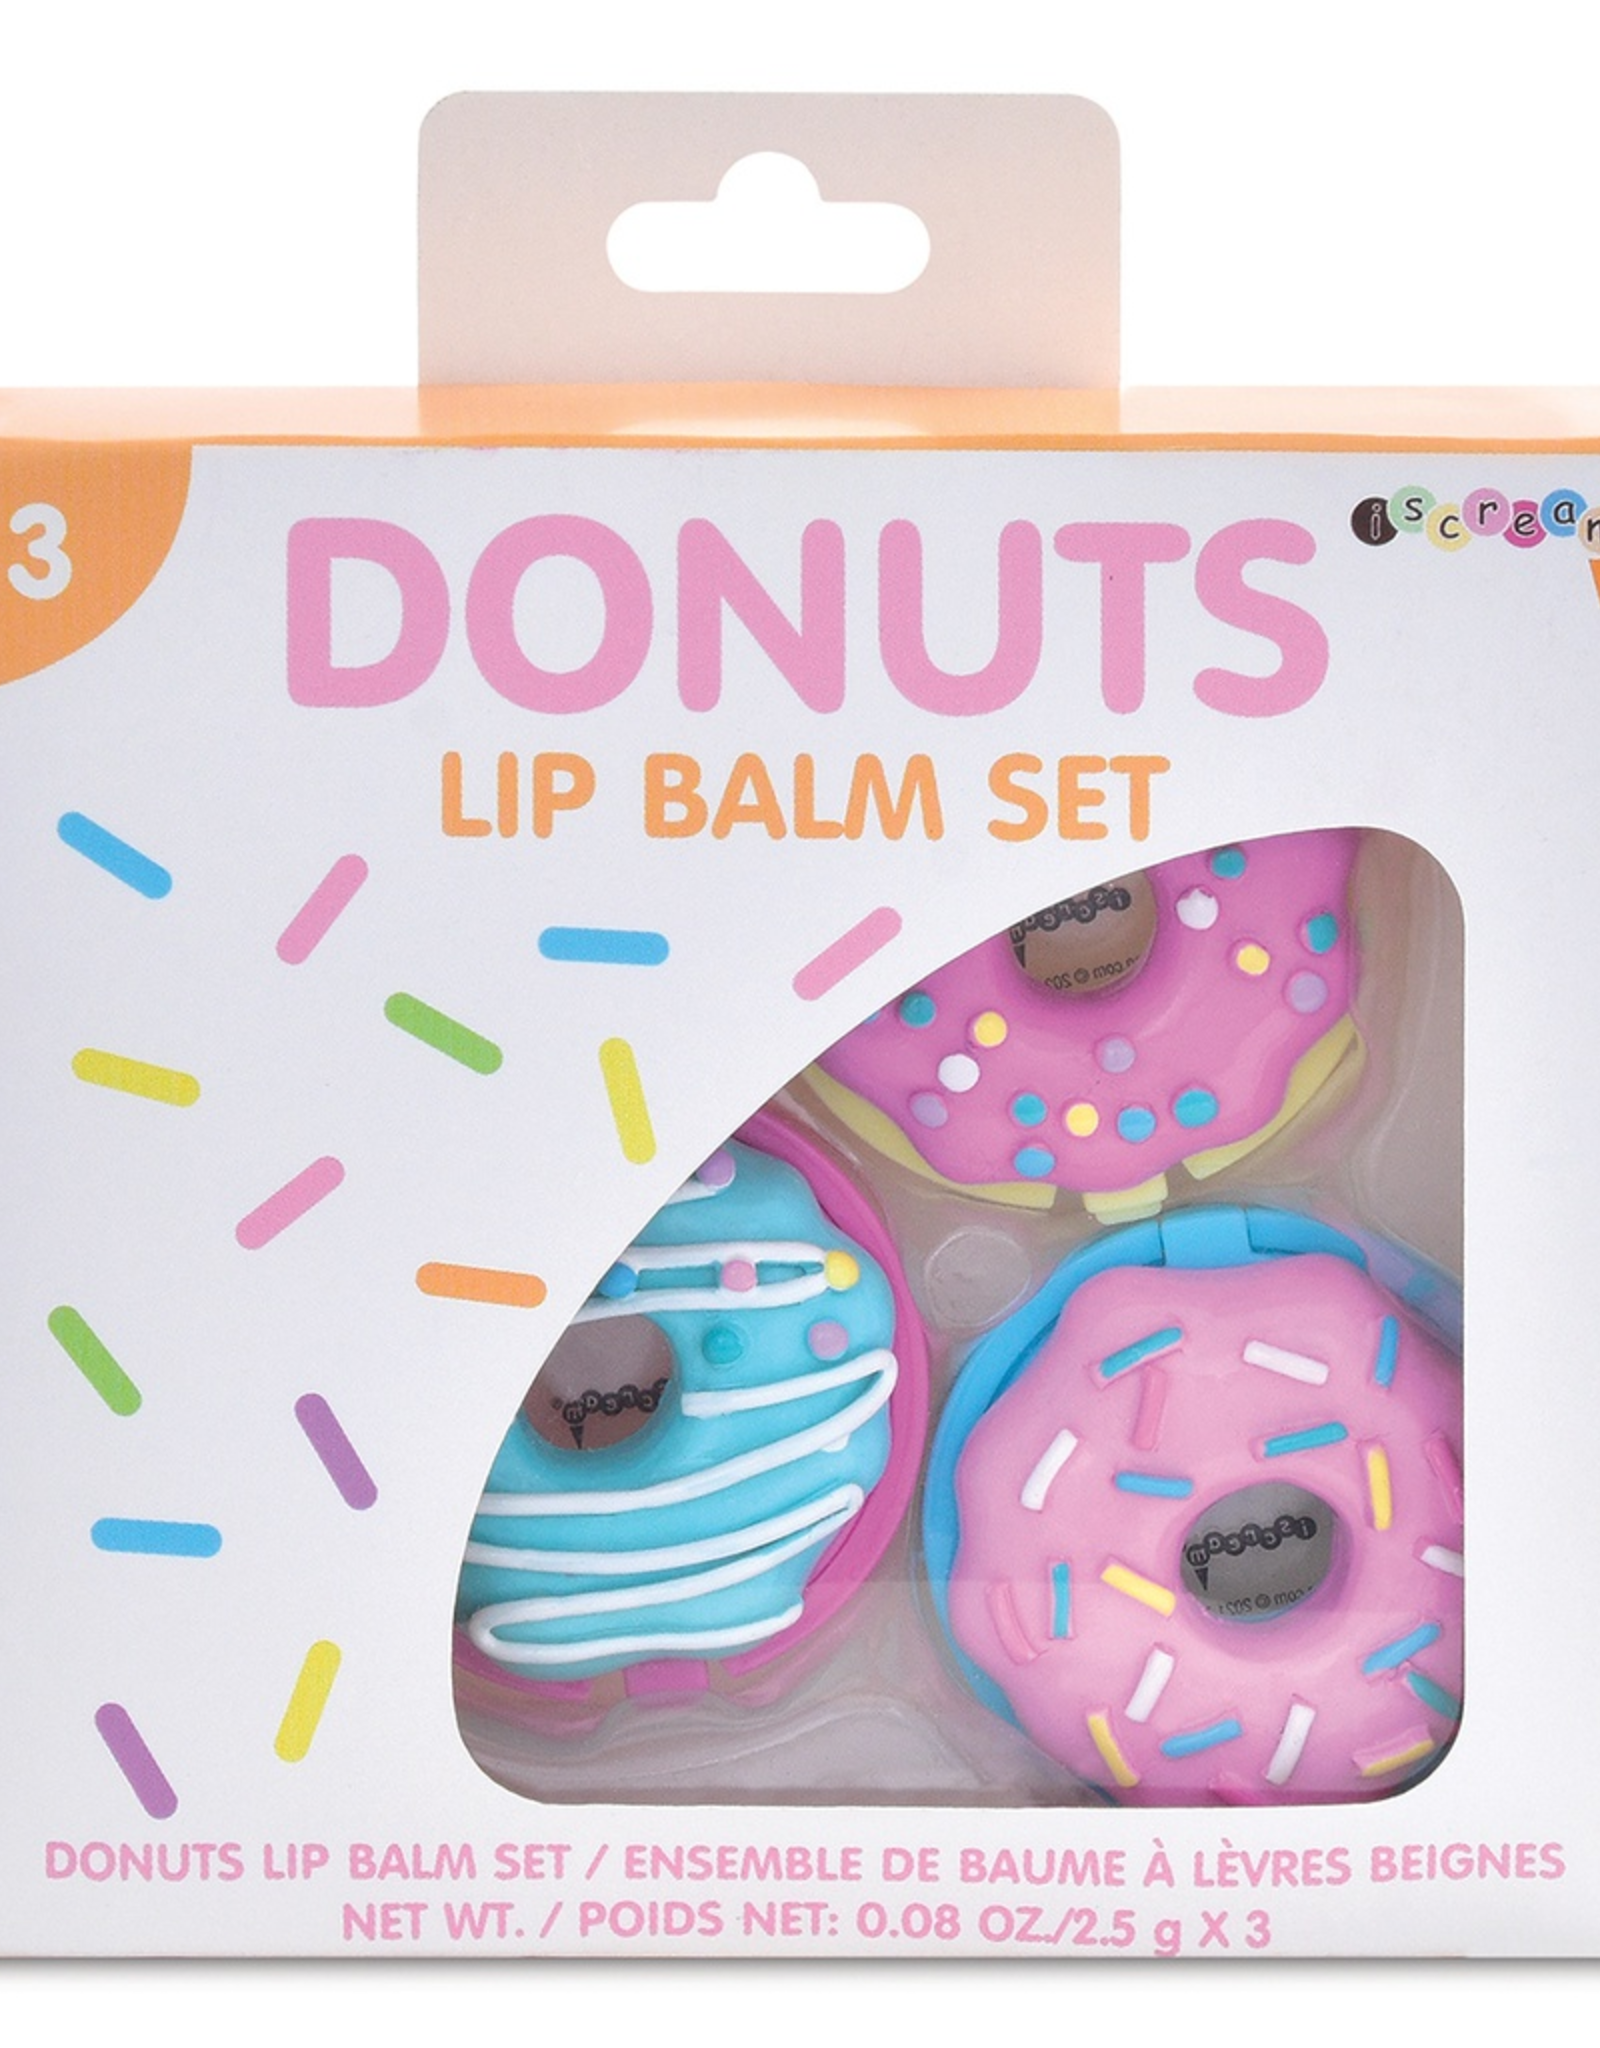 Iscream Donuts Lip Balm Set